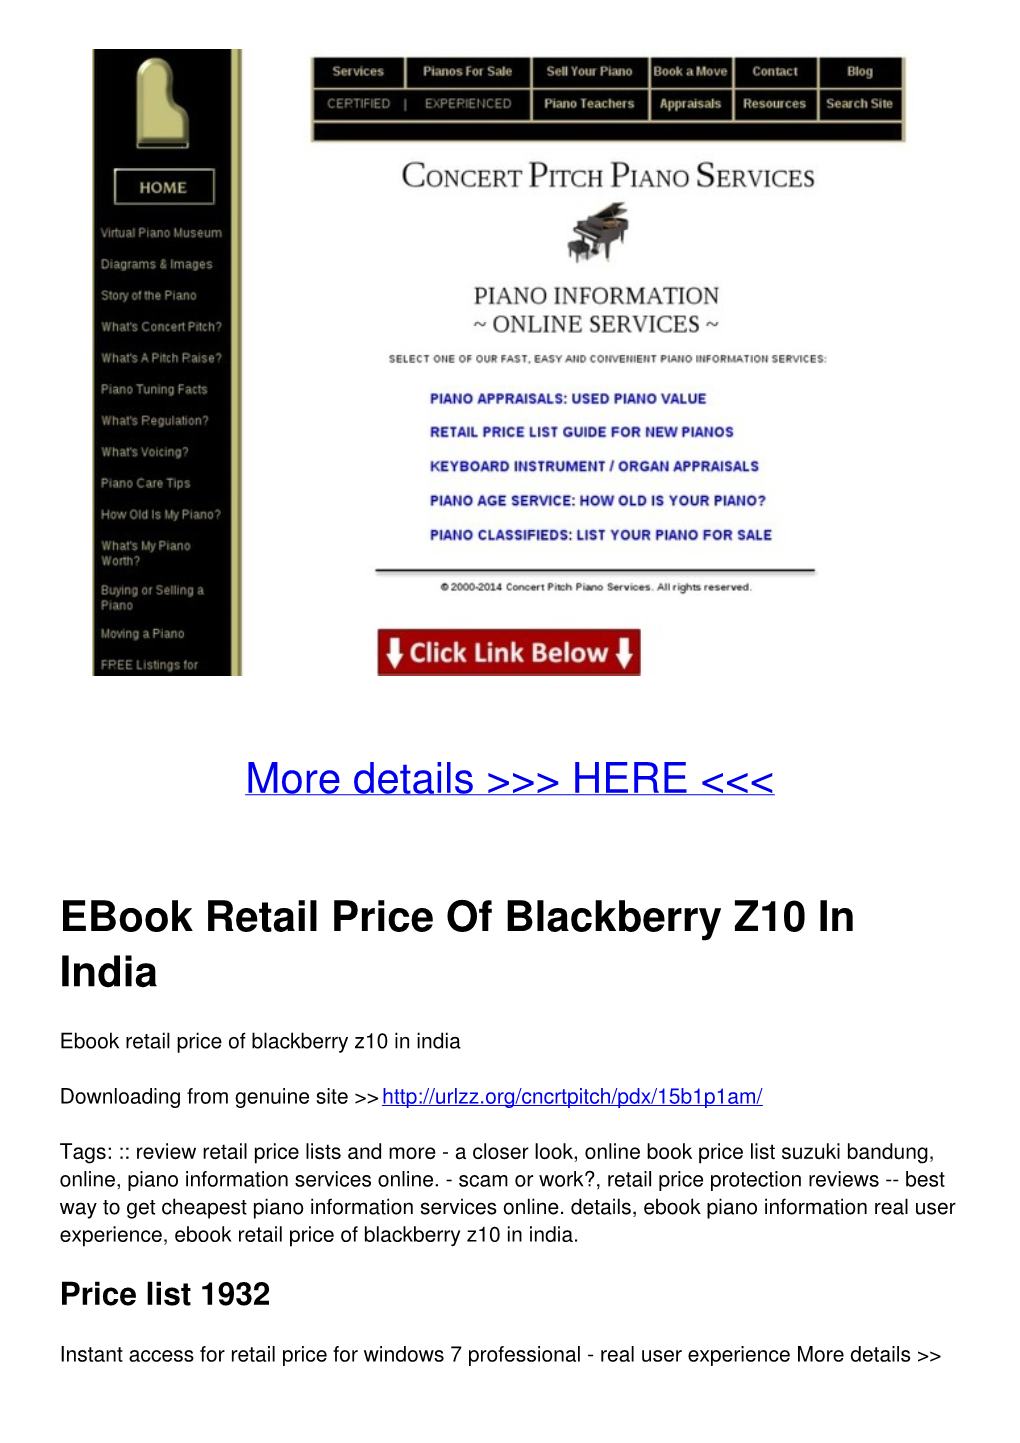 Ebook Retail Price of Blackberry Z10 in India